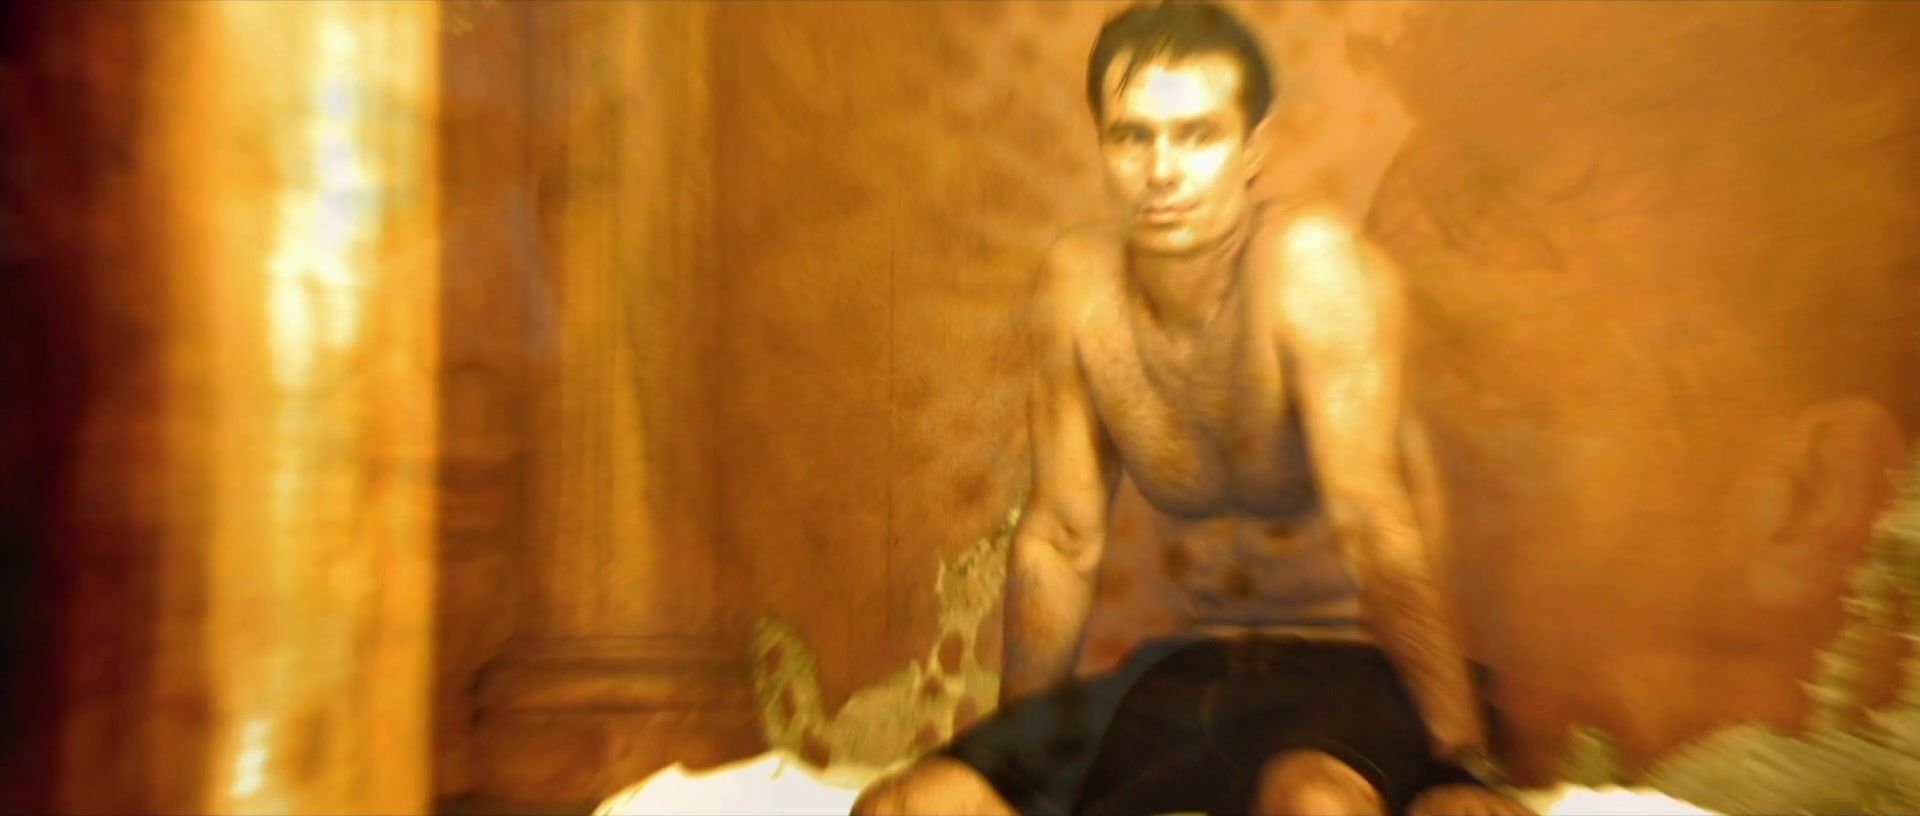 Amature Sex Eve Mauro nude - The Steam Experiment (2009) Masturbandose